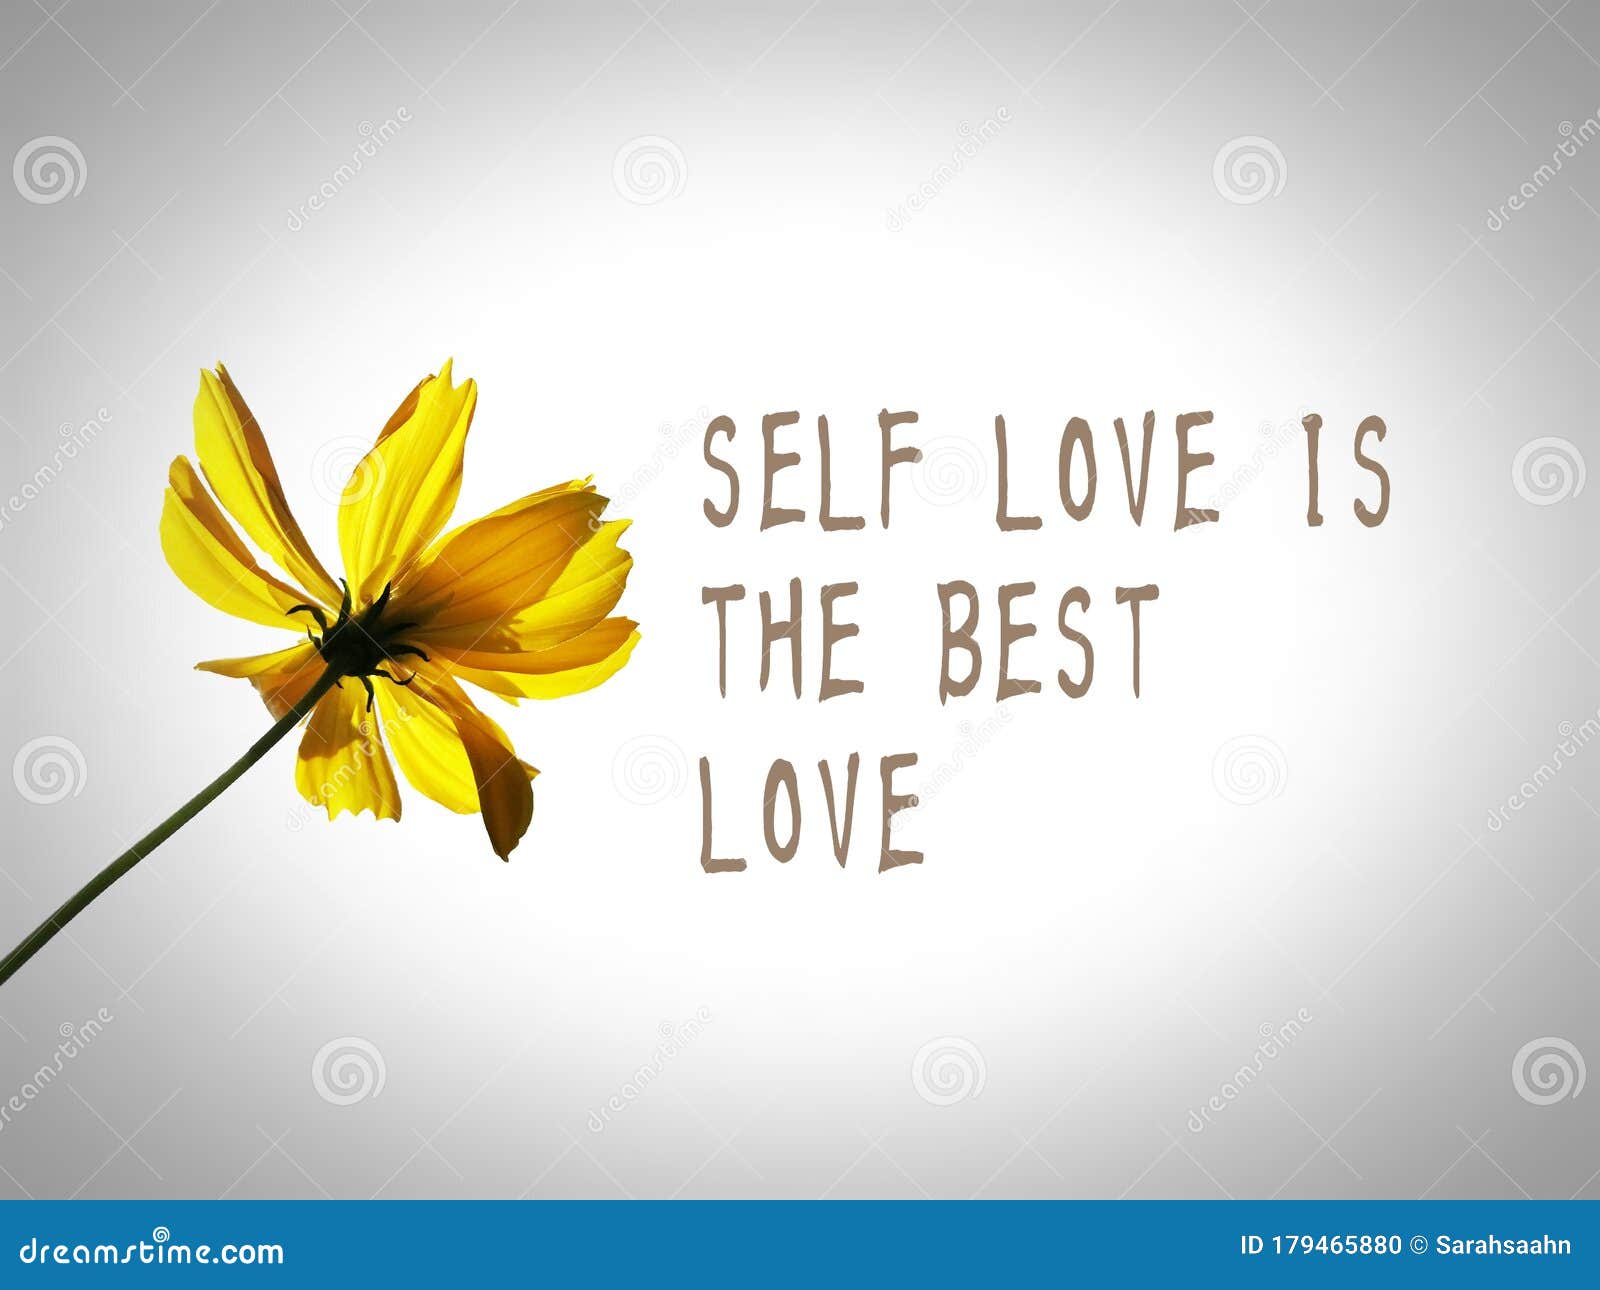 Love quotes self 120 Self